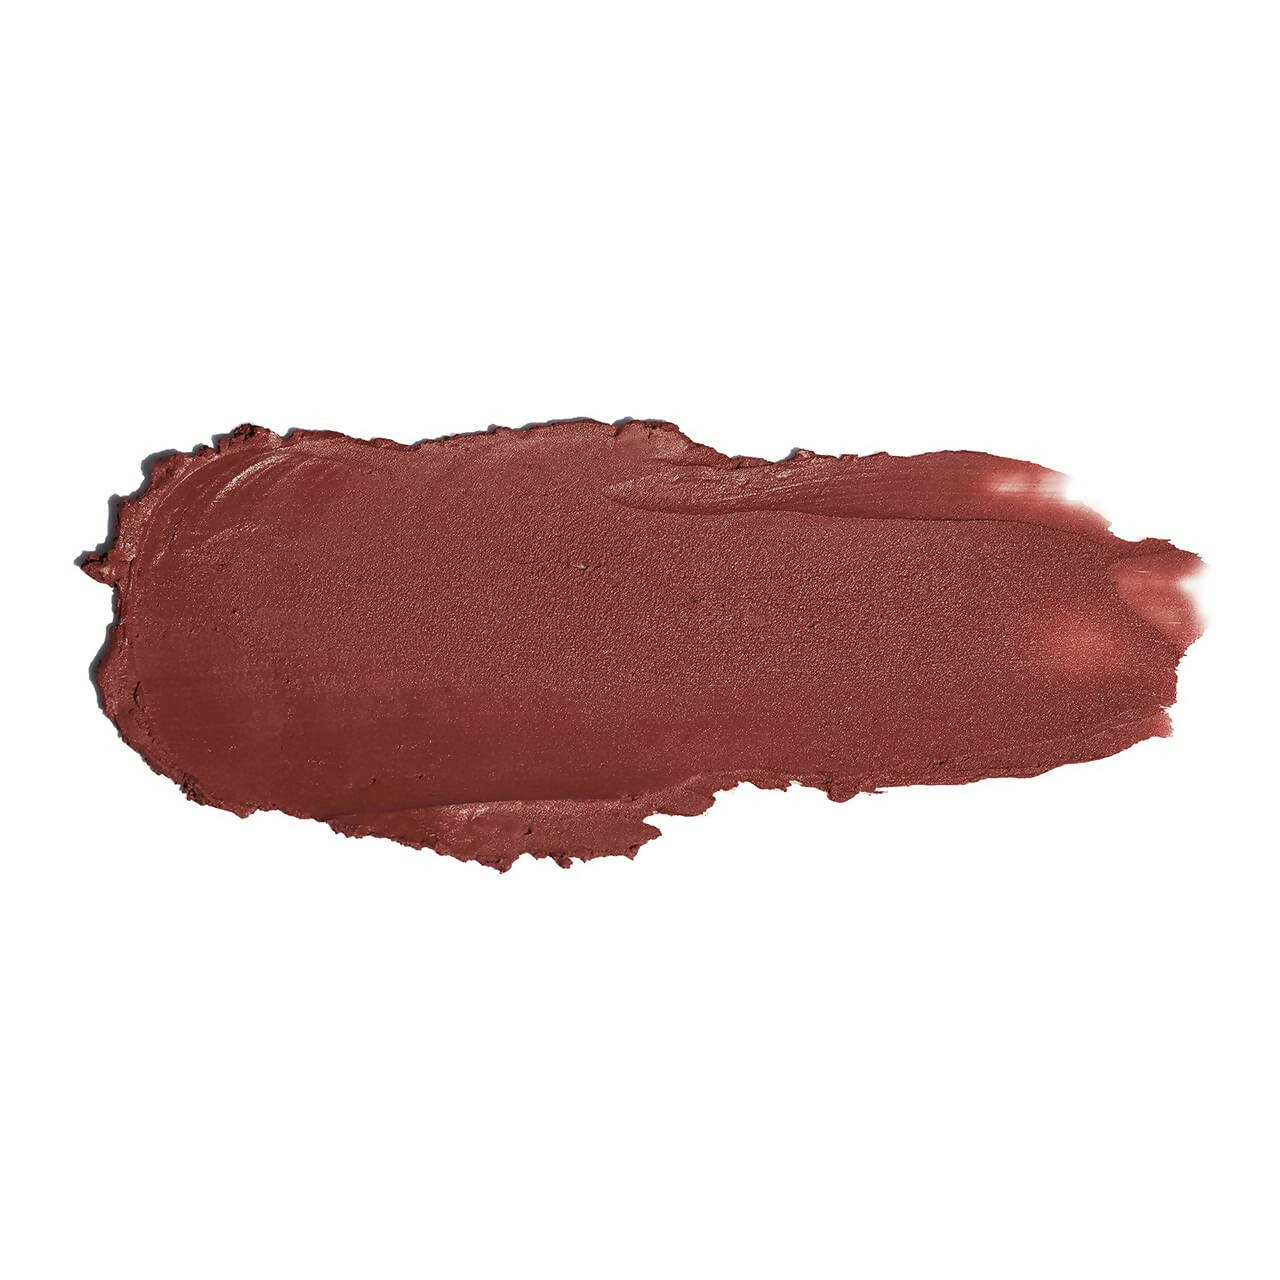 FAE Beauty Rose Brown Modern Matte Lipstick - Shade Awkward